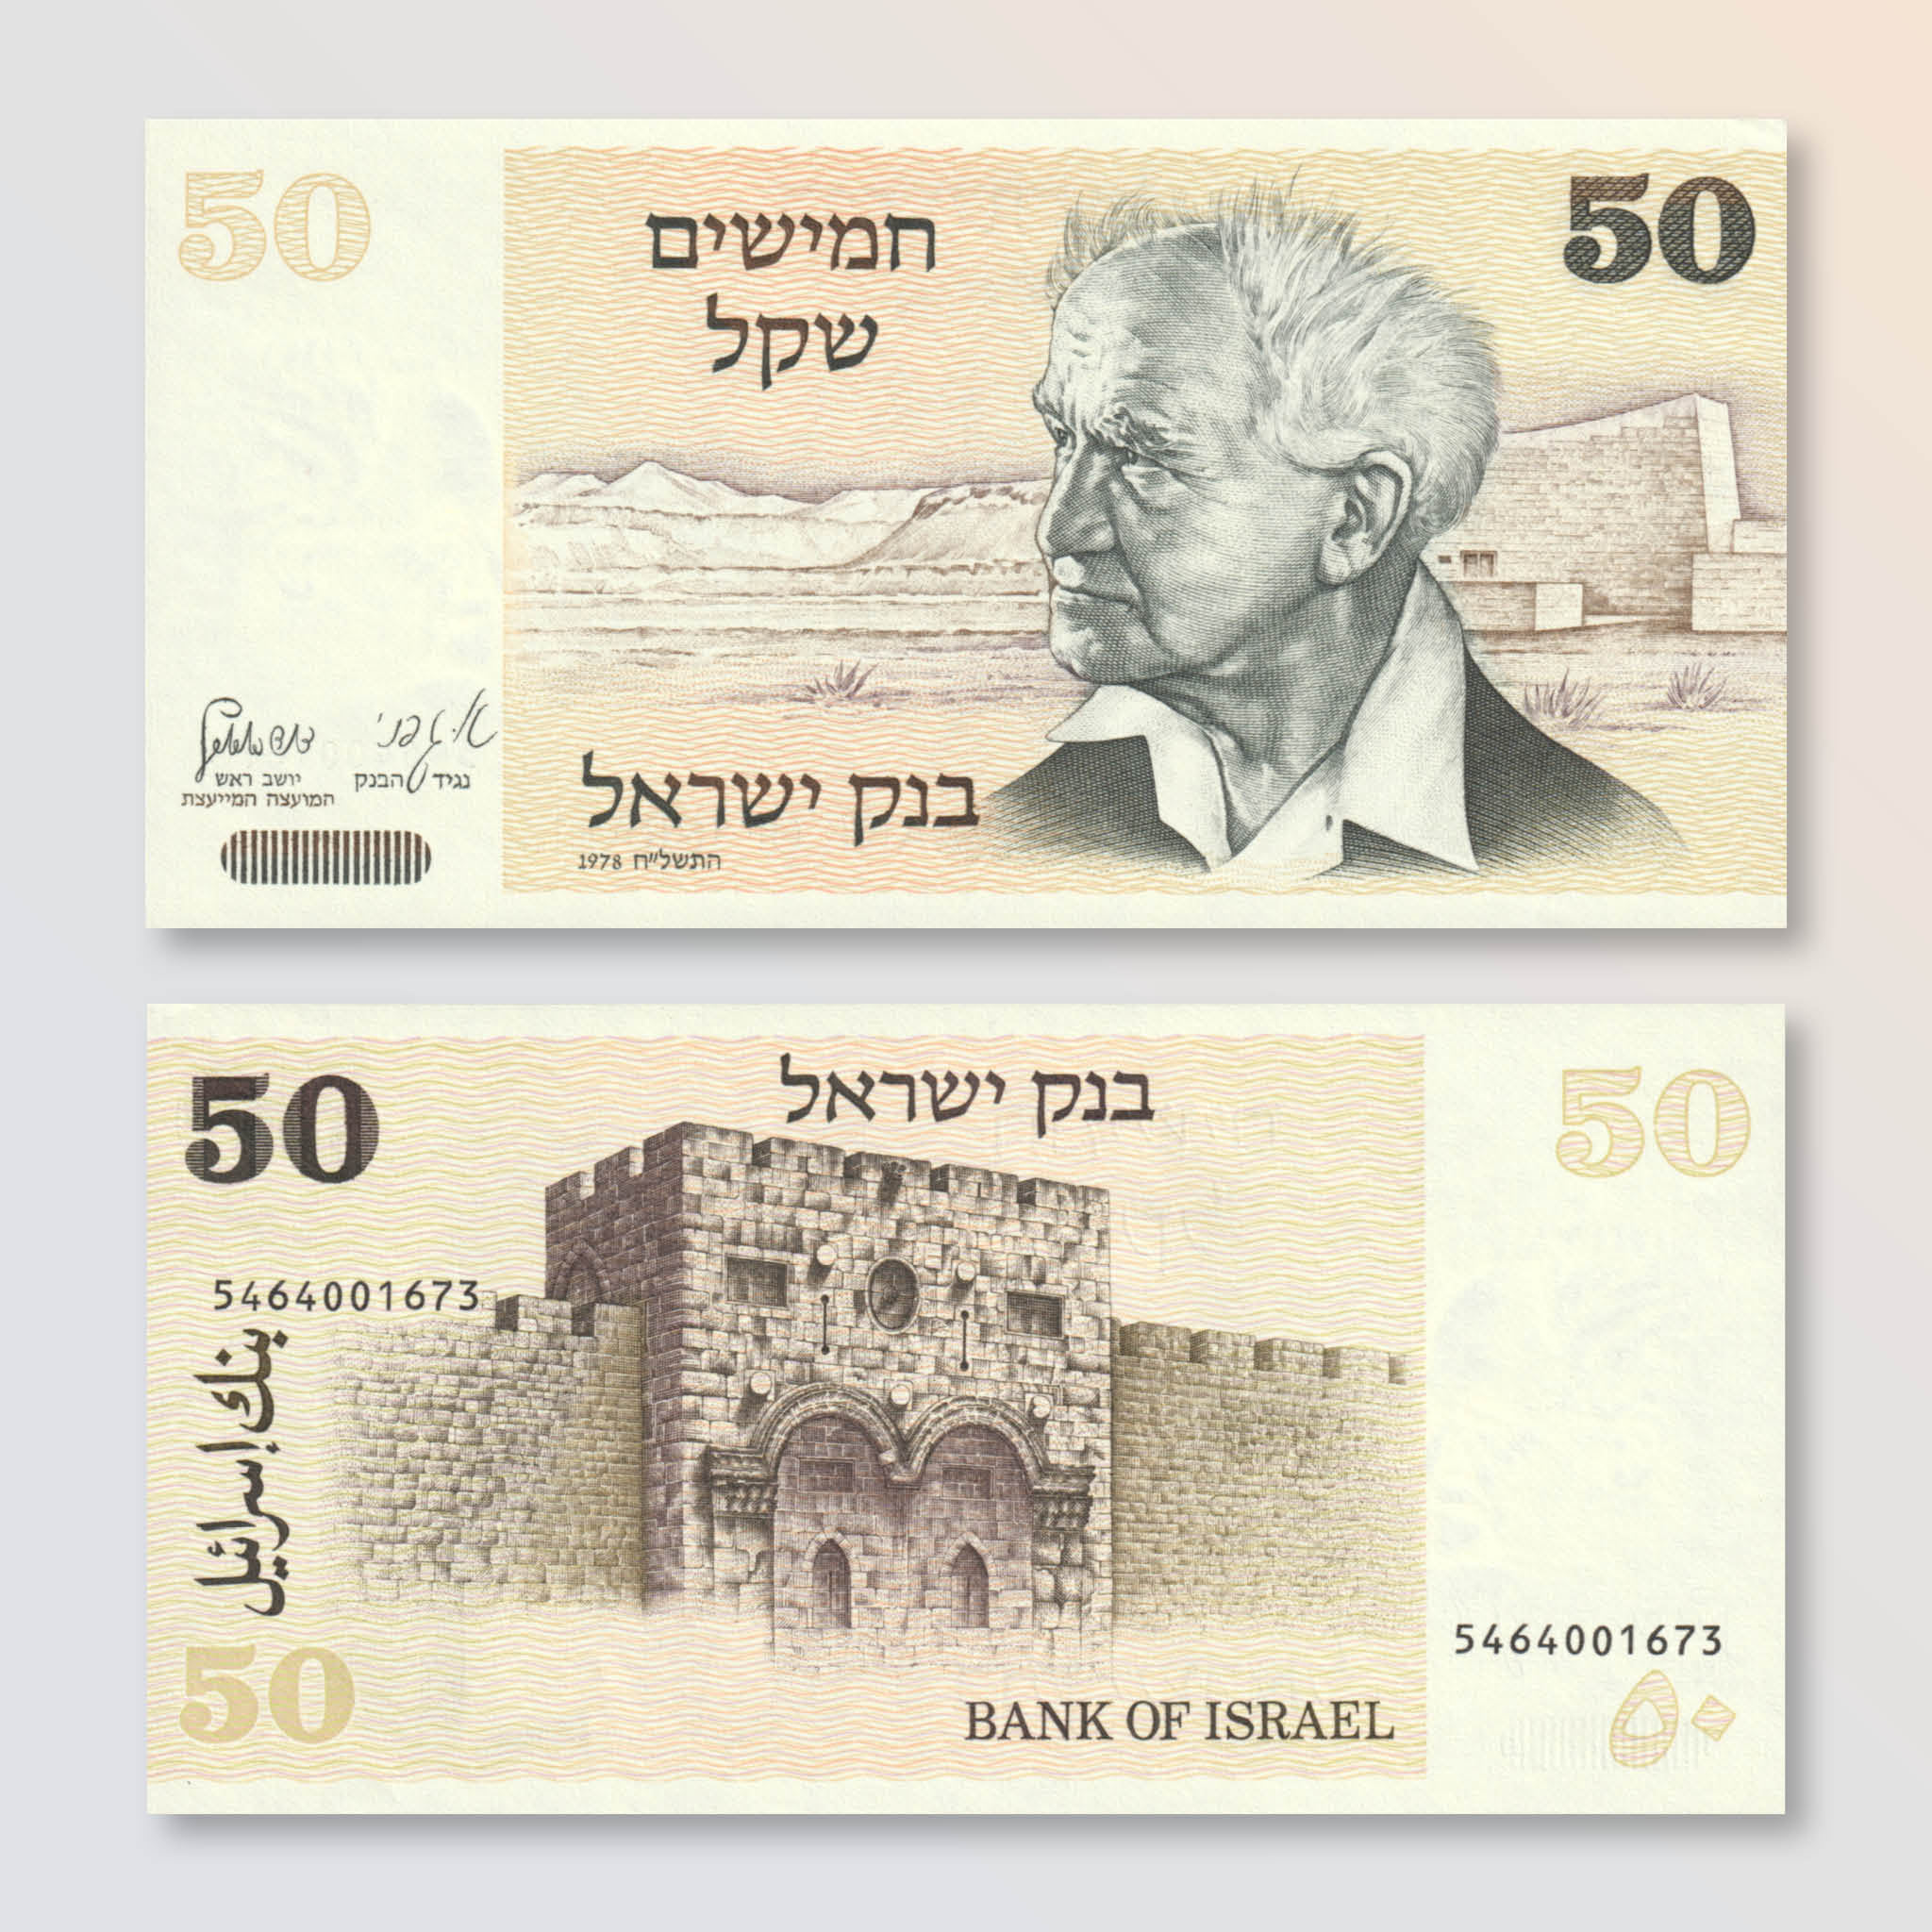 Israel 50 Sheqalim, 1978, B423a, P46a, UNC - Robert's World Money - World Banknotes